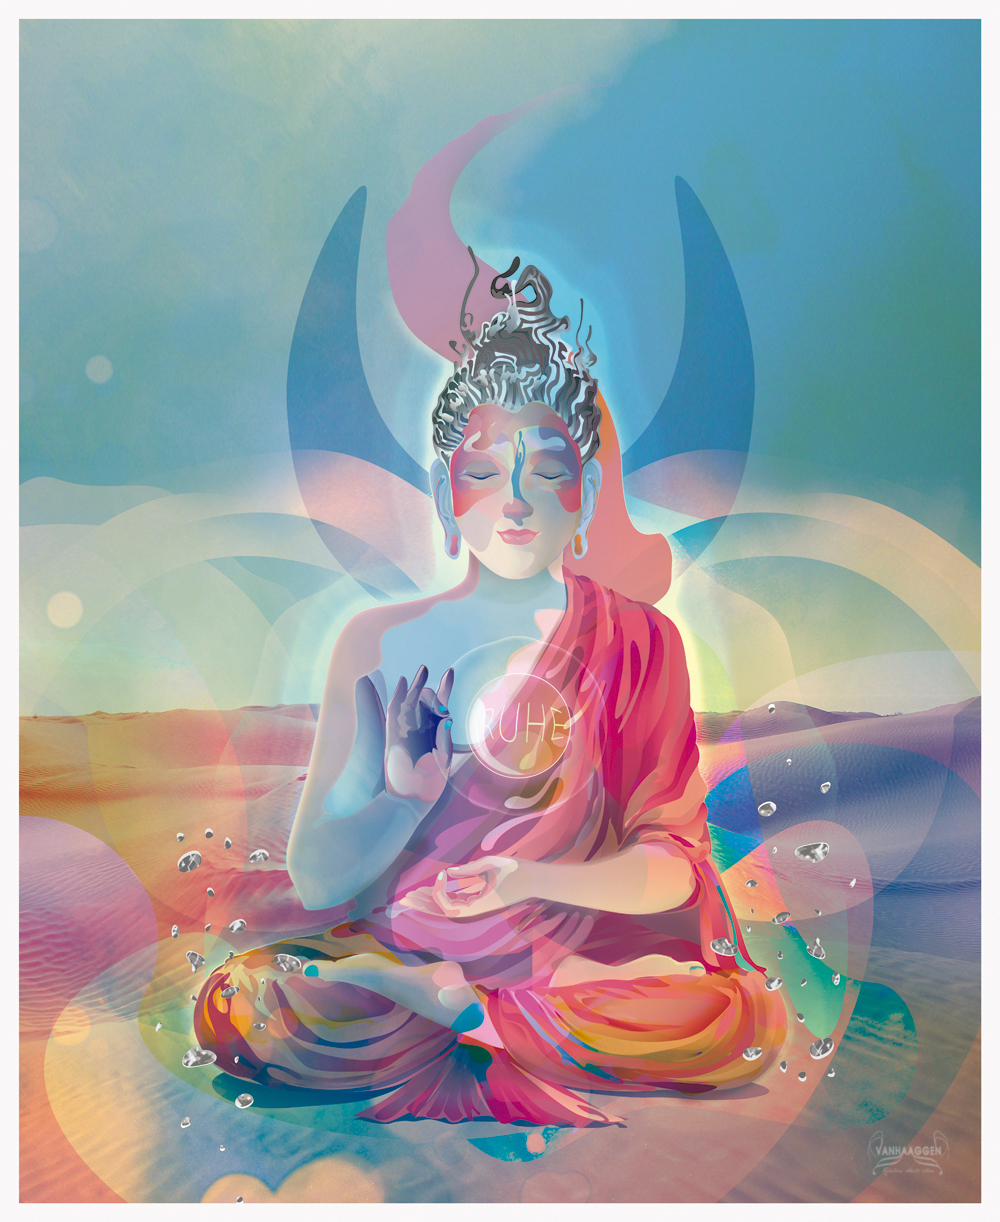 Buddha  joy peace budism buda quite stars vanhaaggen photoshop Illustrator christian haag